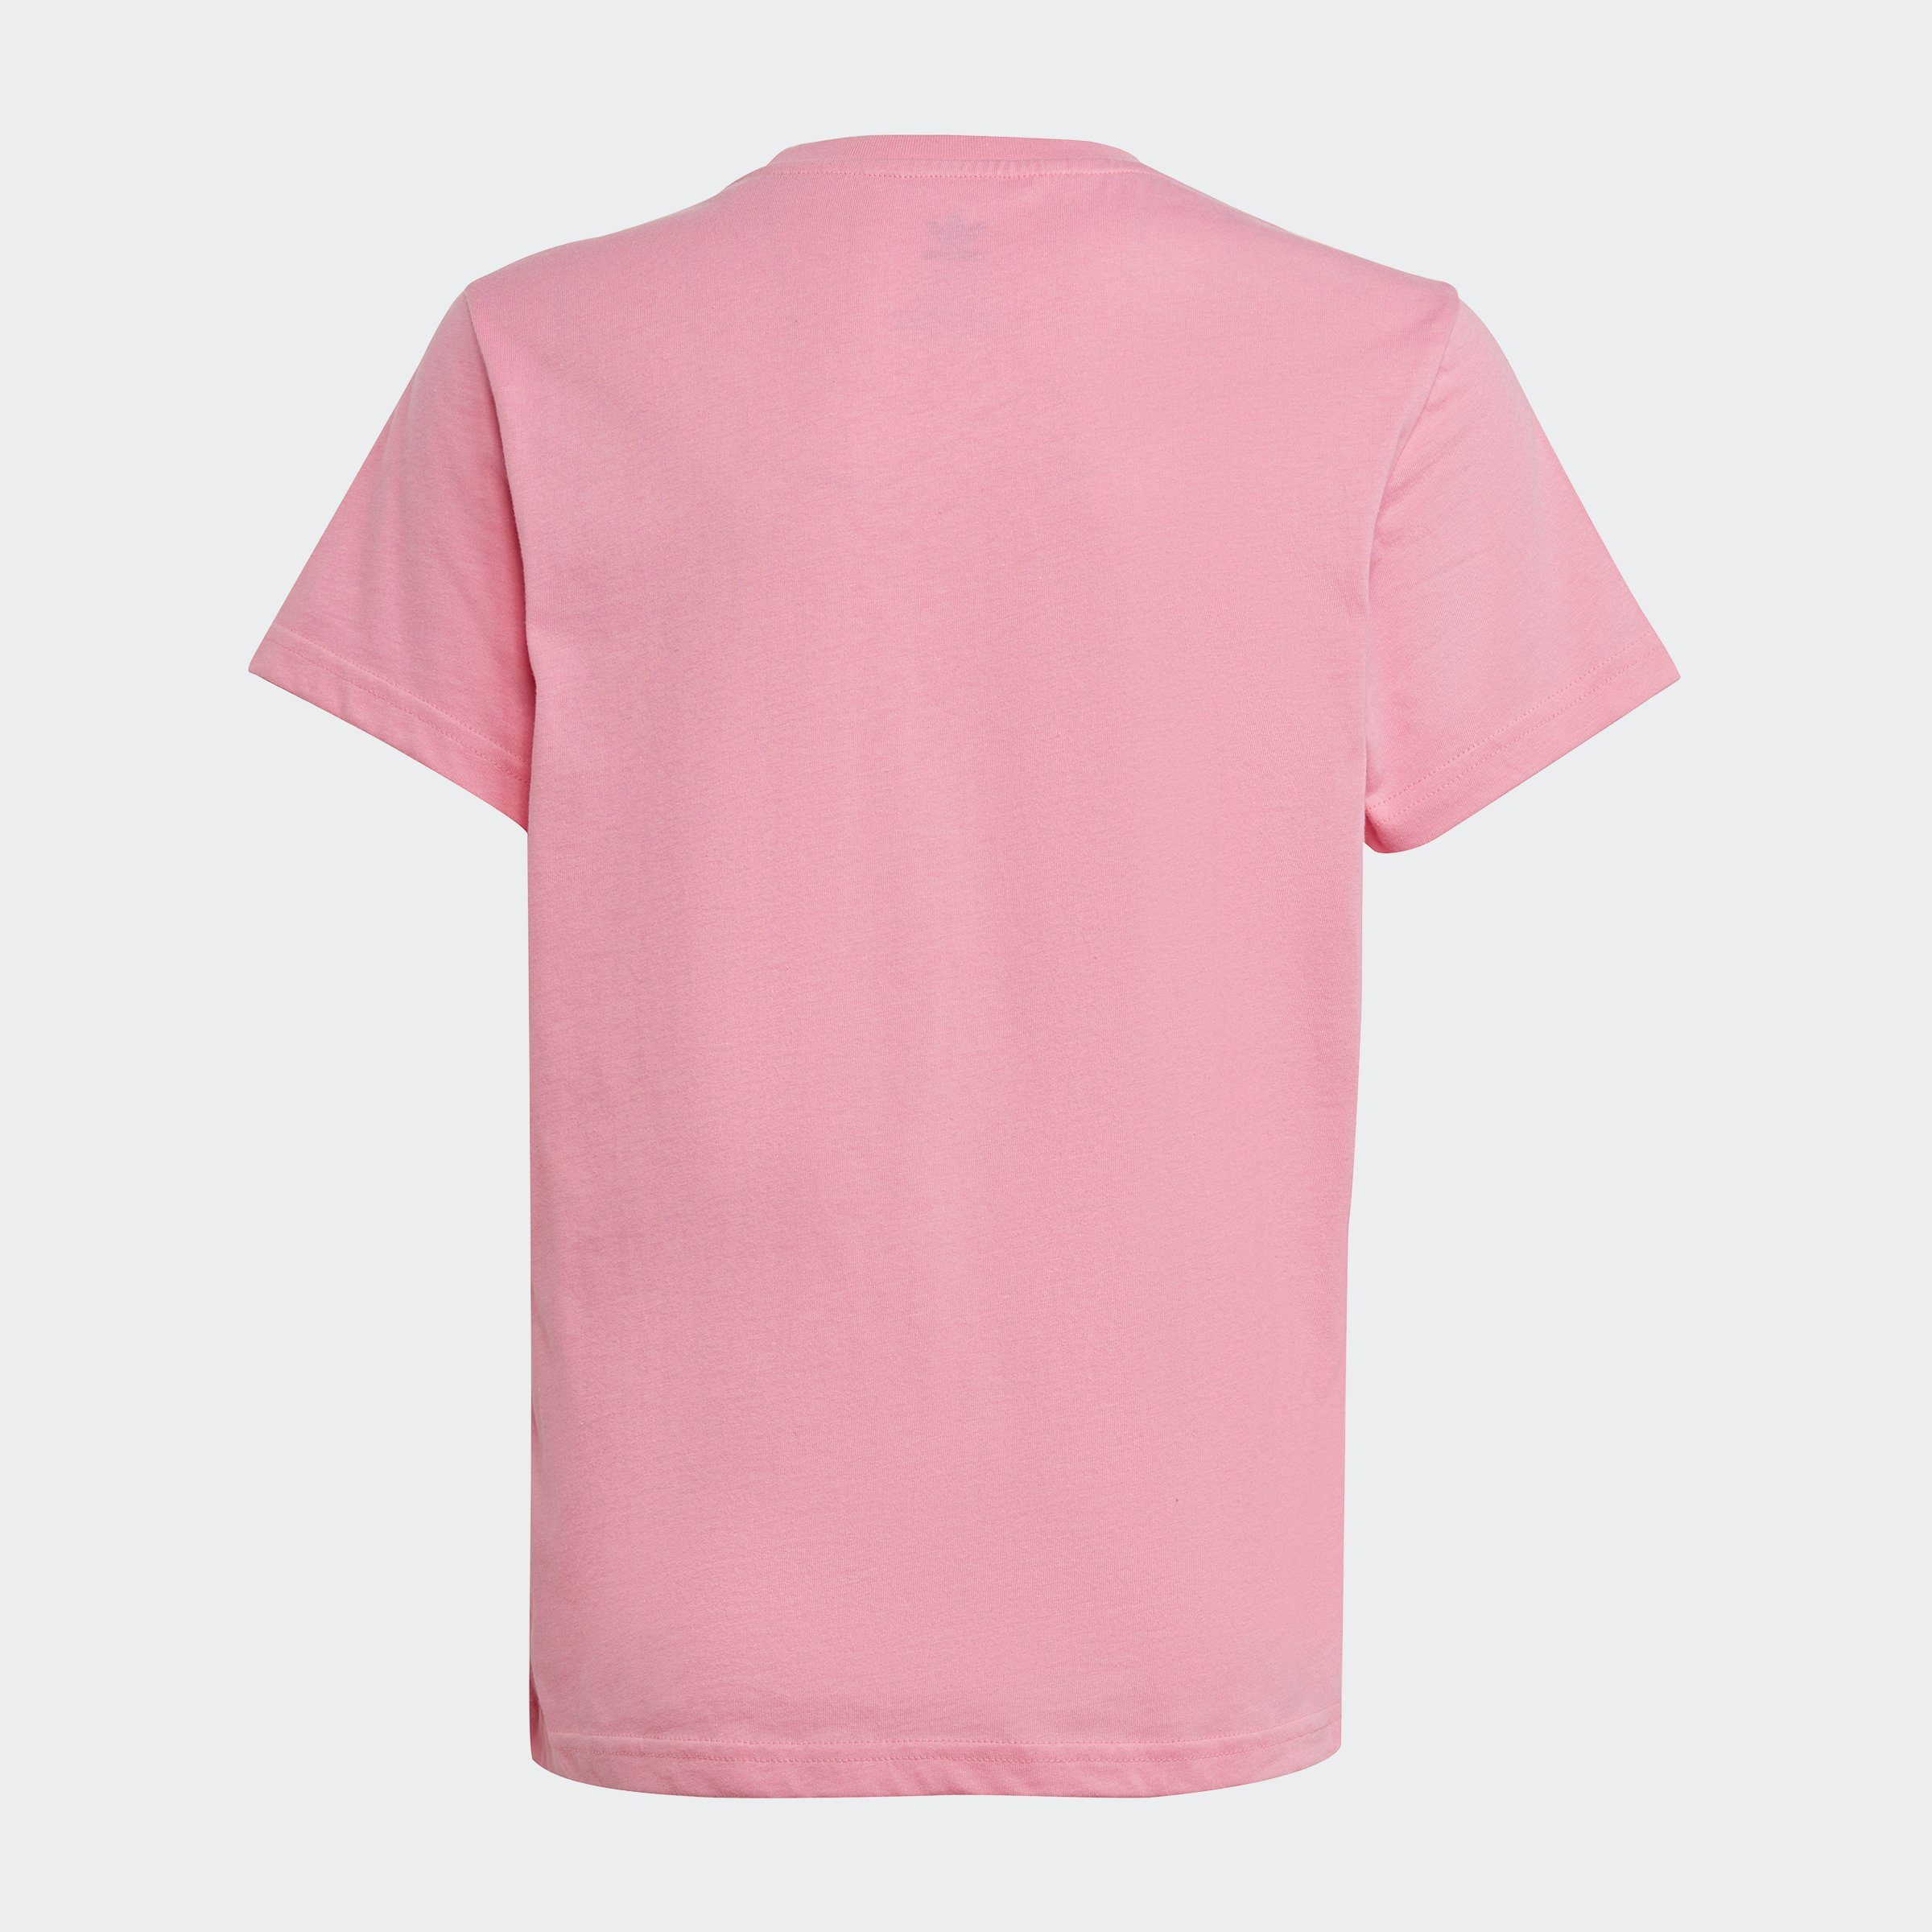 adidas Originals T-Shirt TREFOIL Pink White Unisex / Bliss TEE